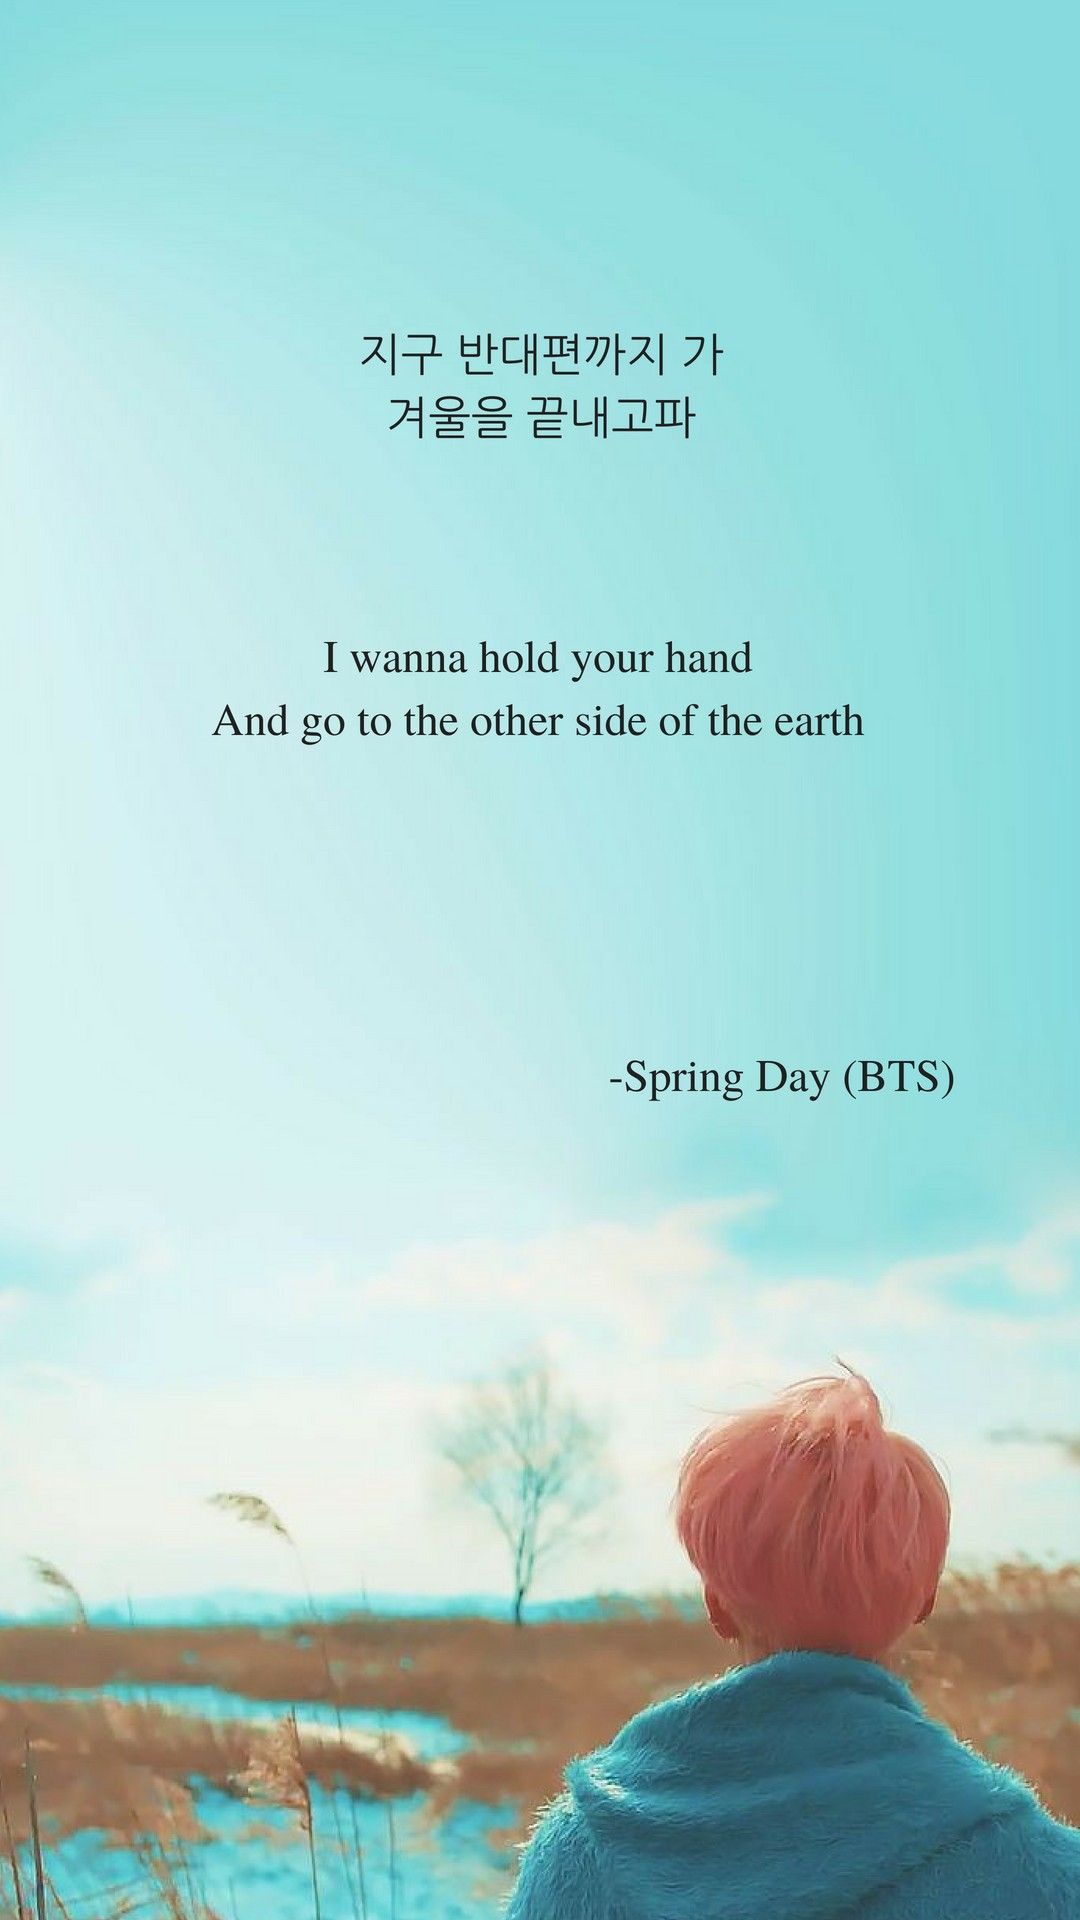 Spring Day By Bts Lyrics Wallpaper In Song